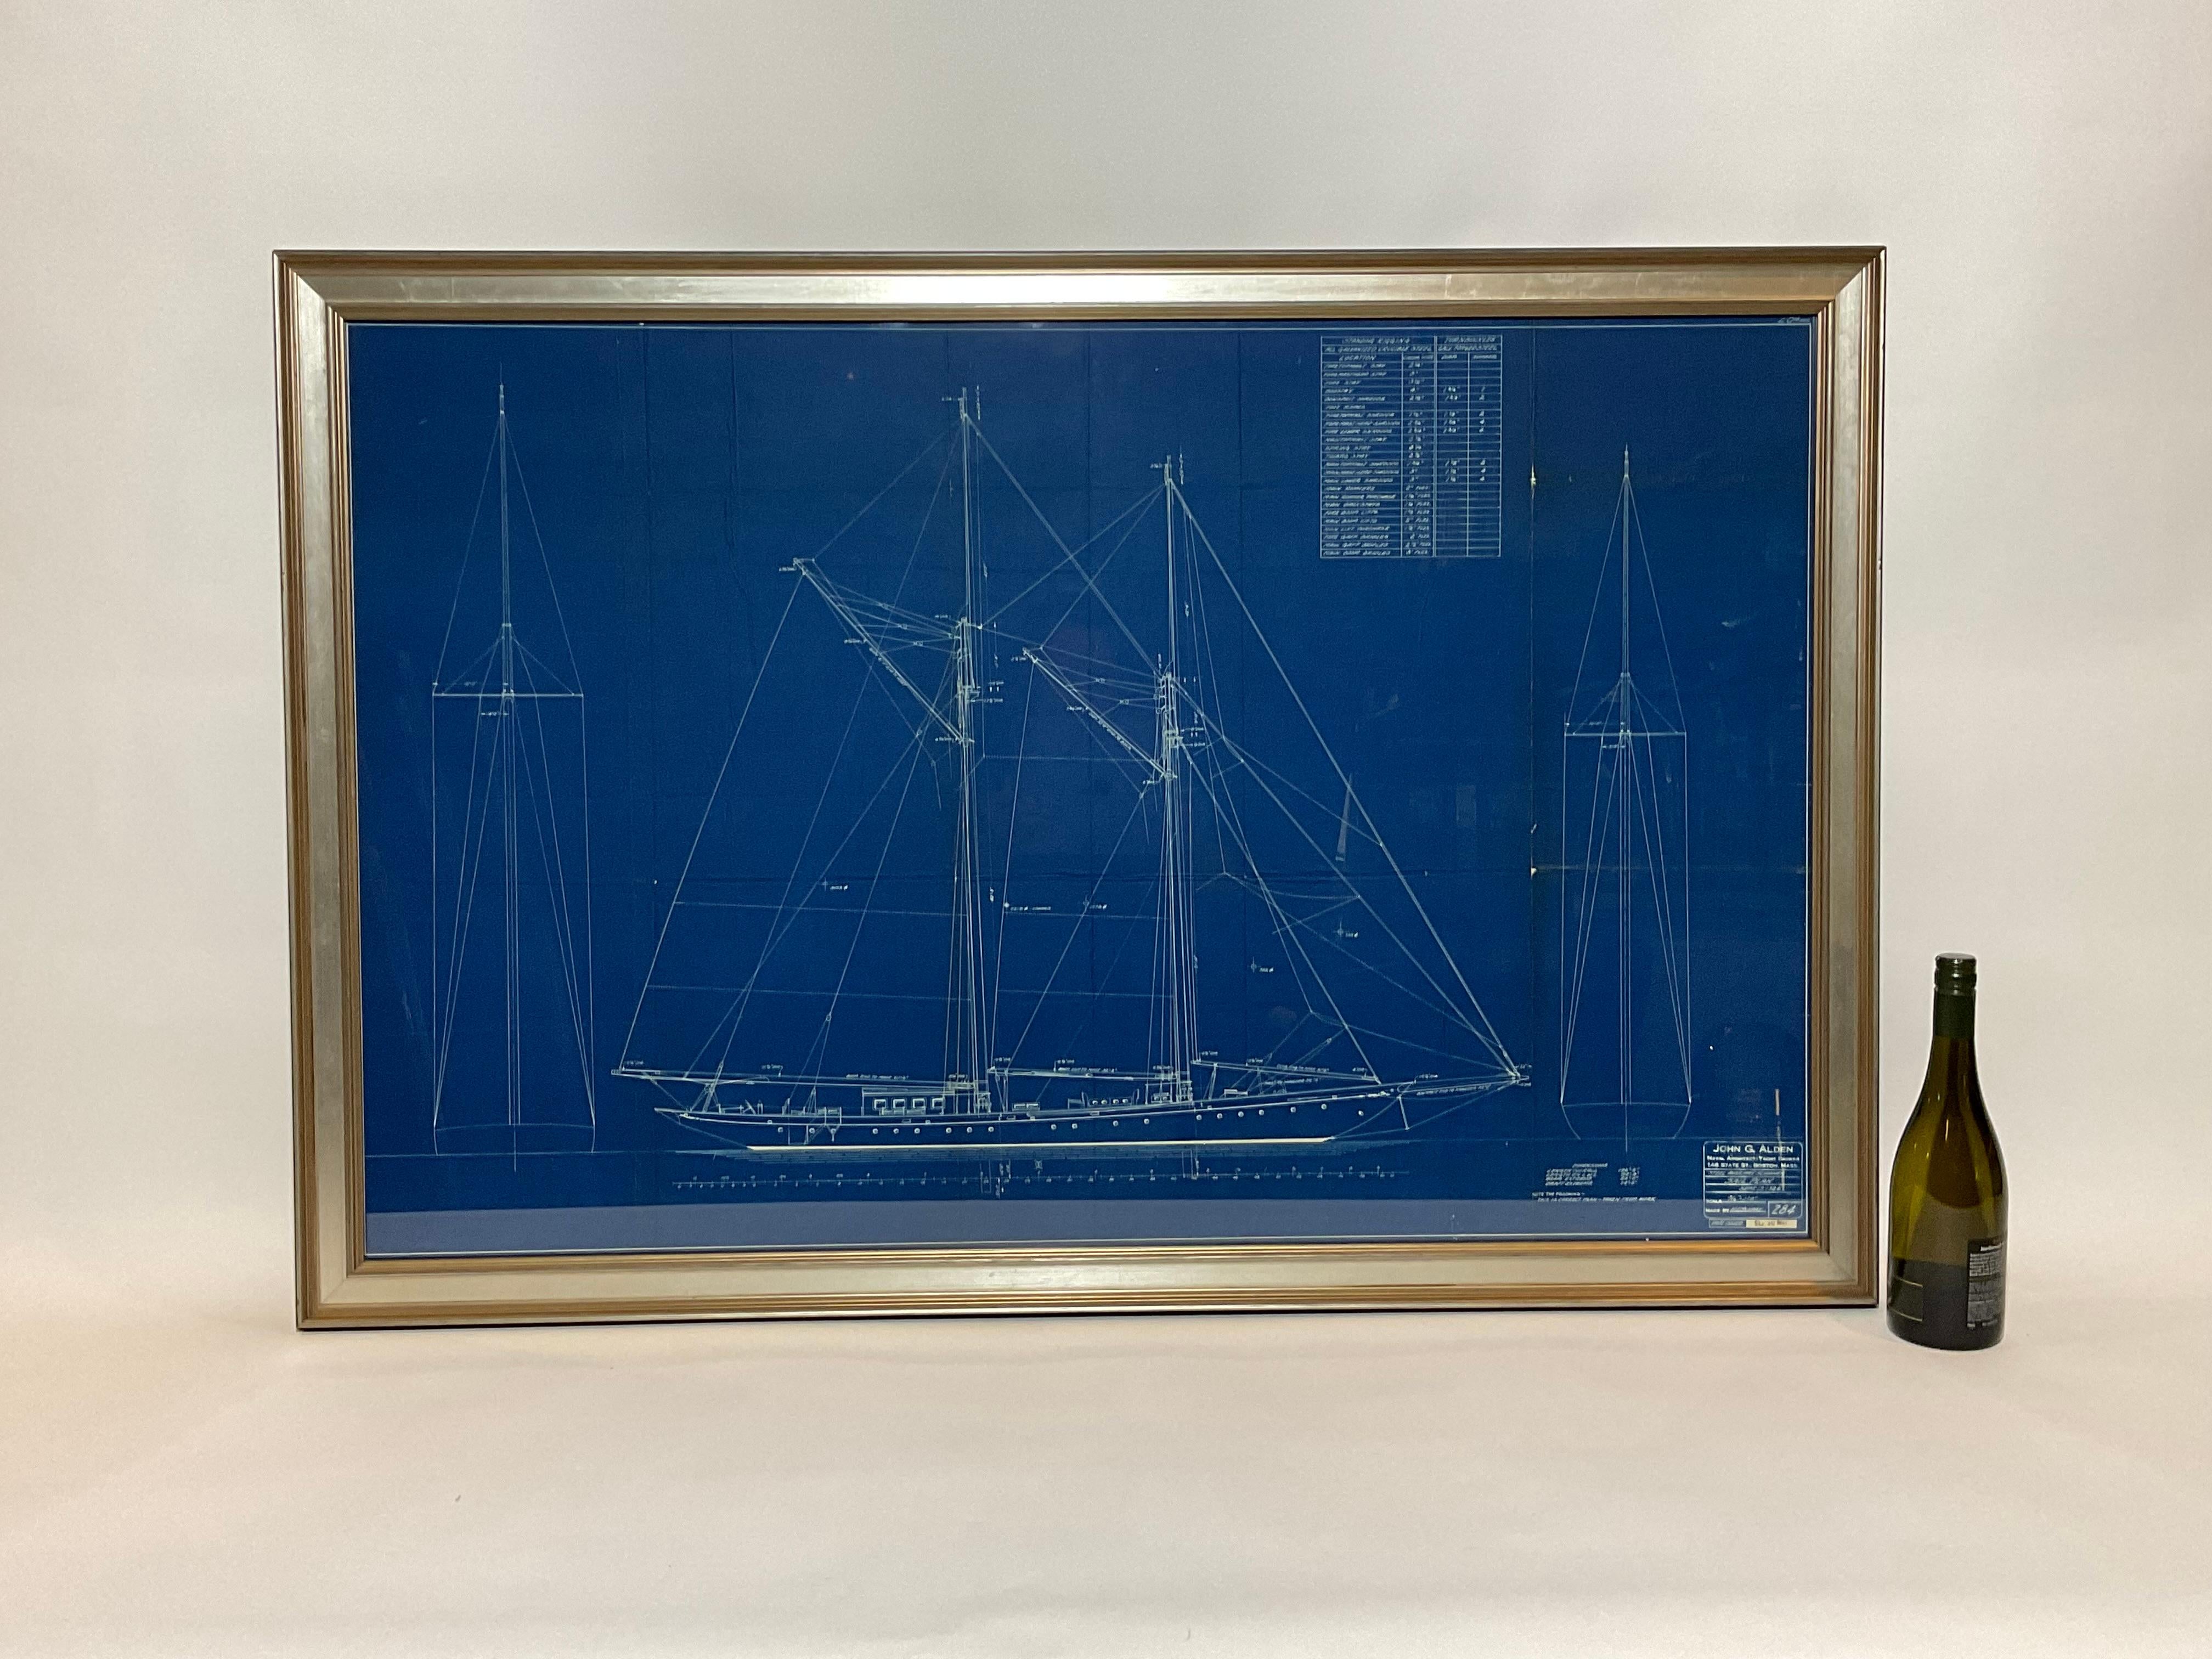 Original John Alden blueprint for the schooner yacht 